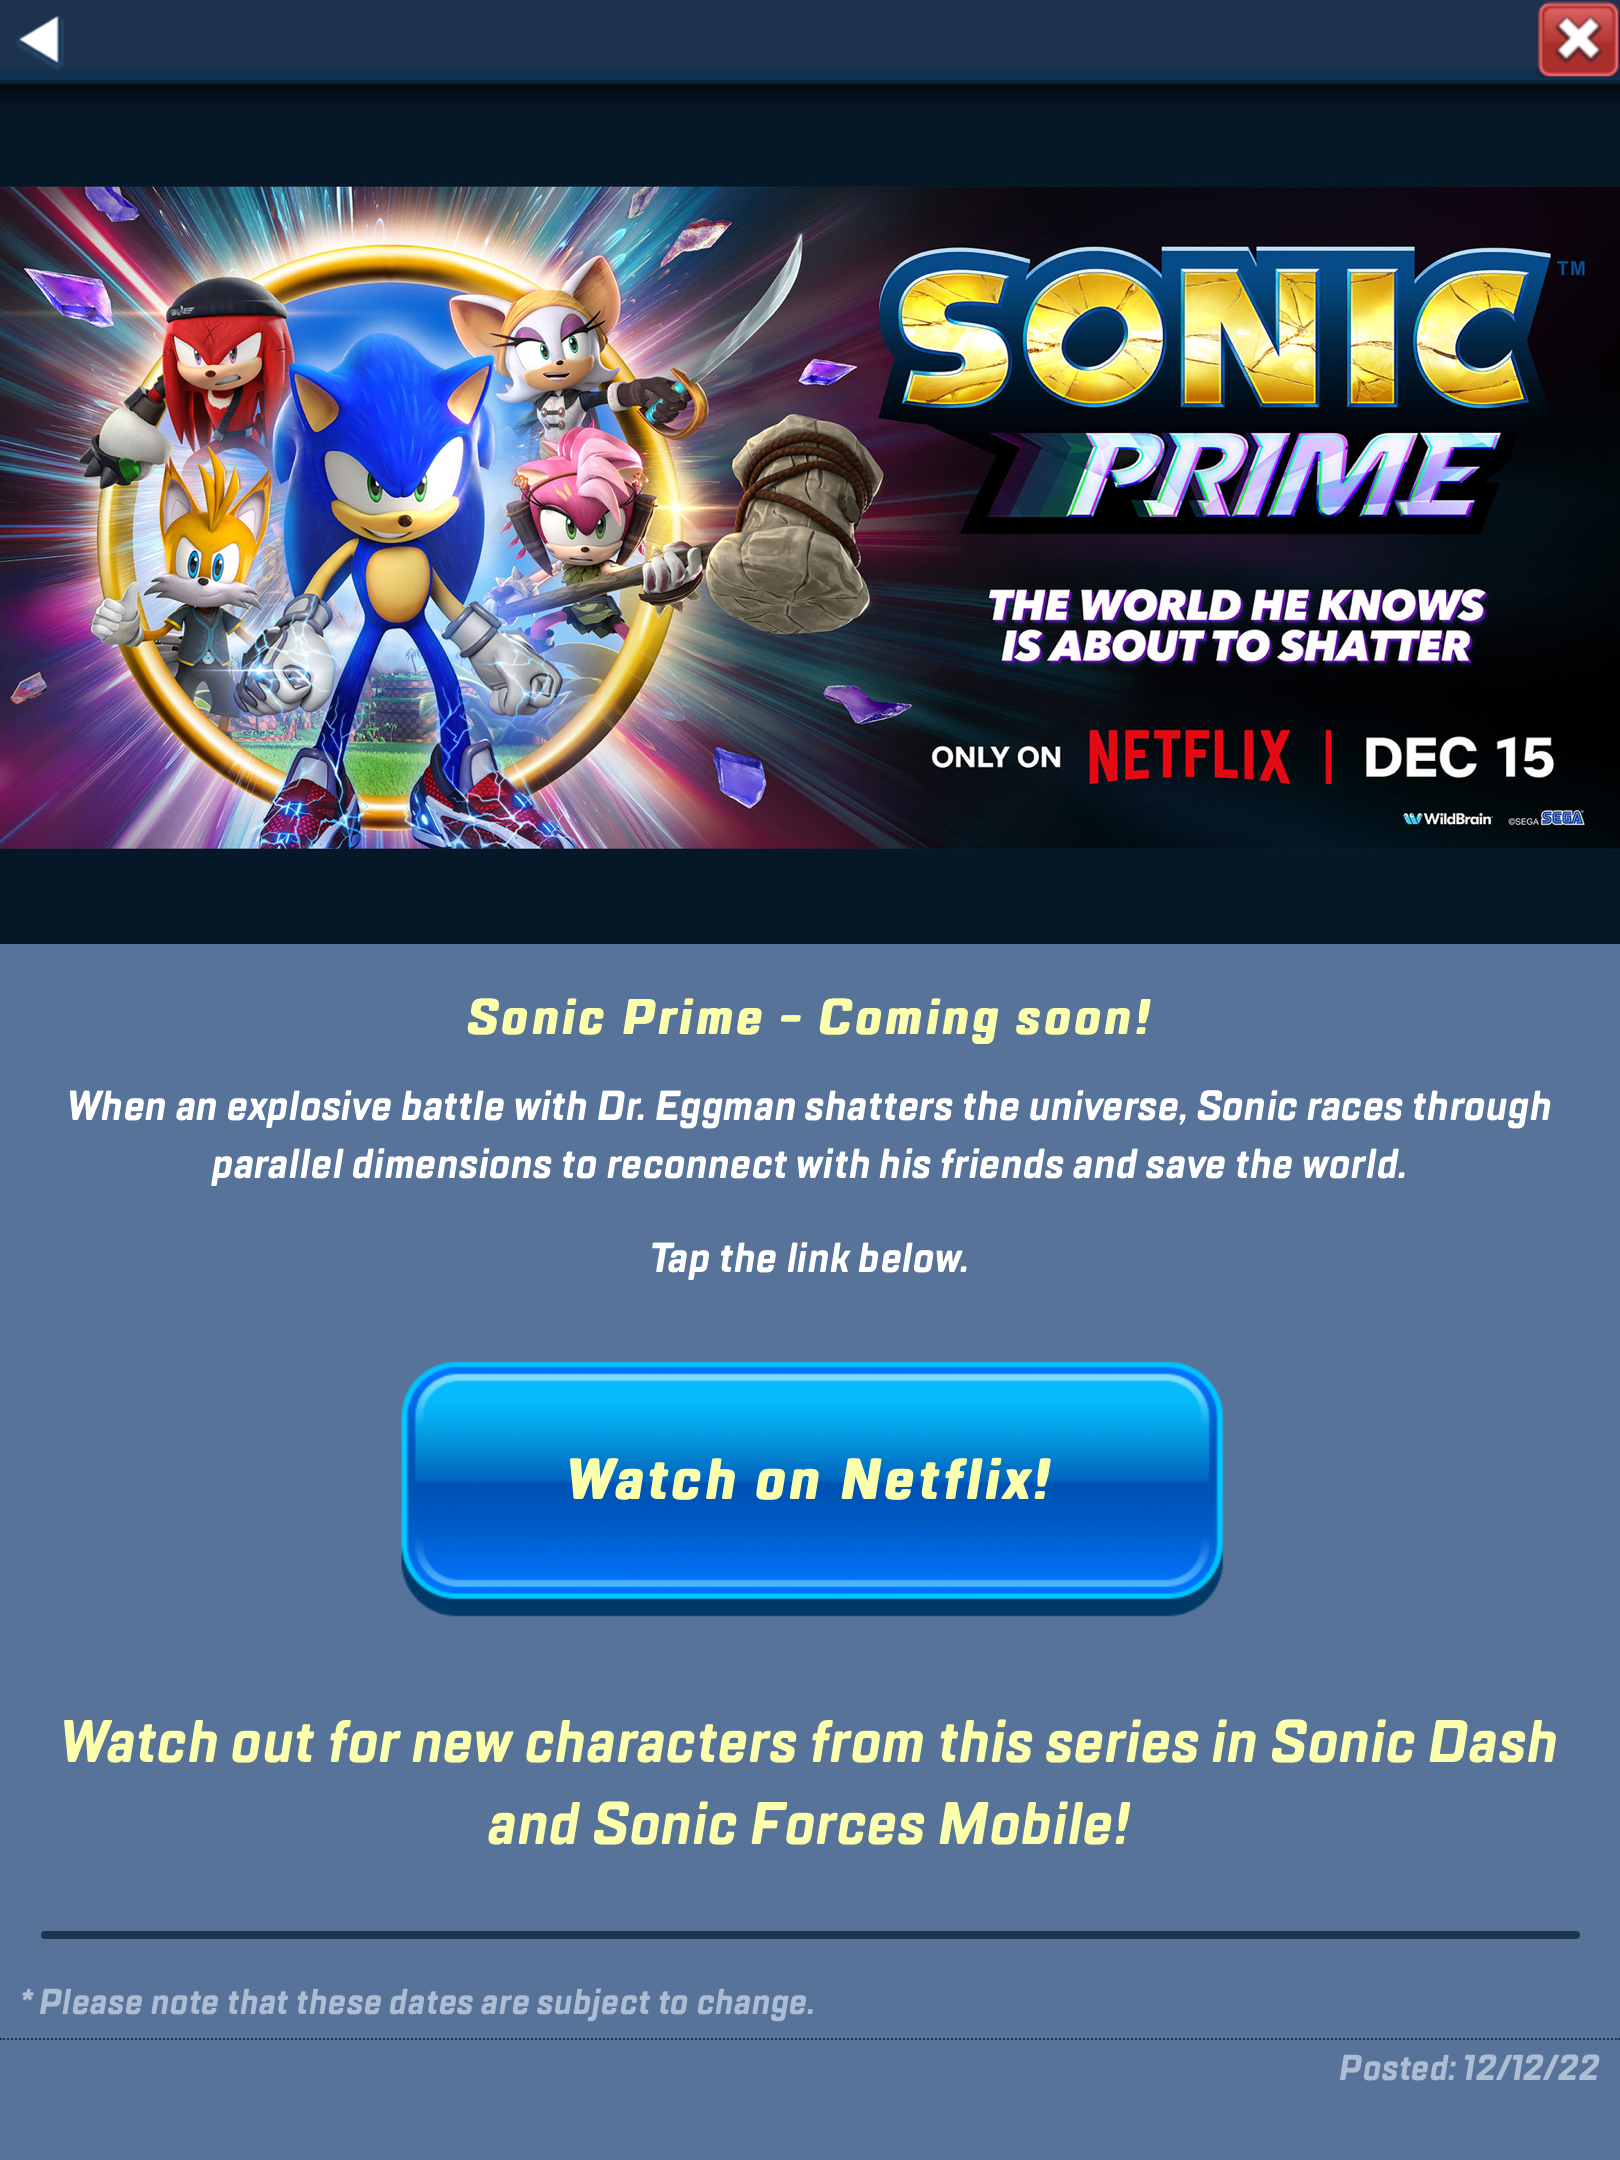 Sonic Prime Dash disponível no Netflix